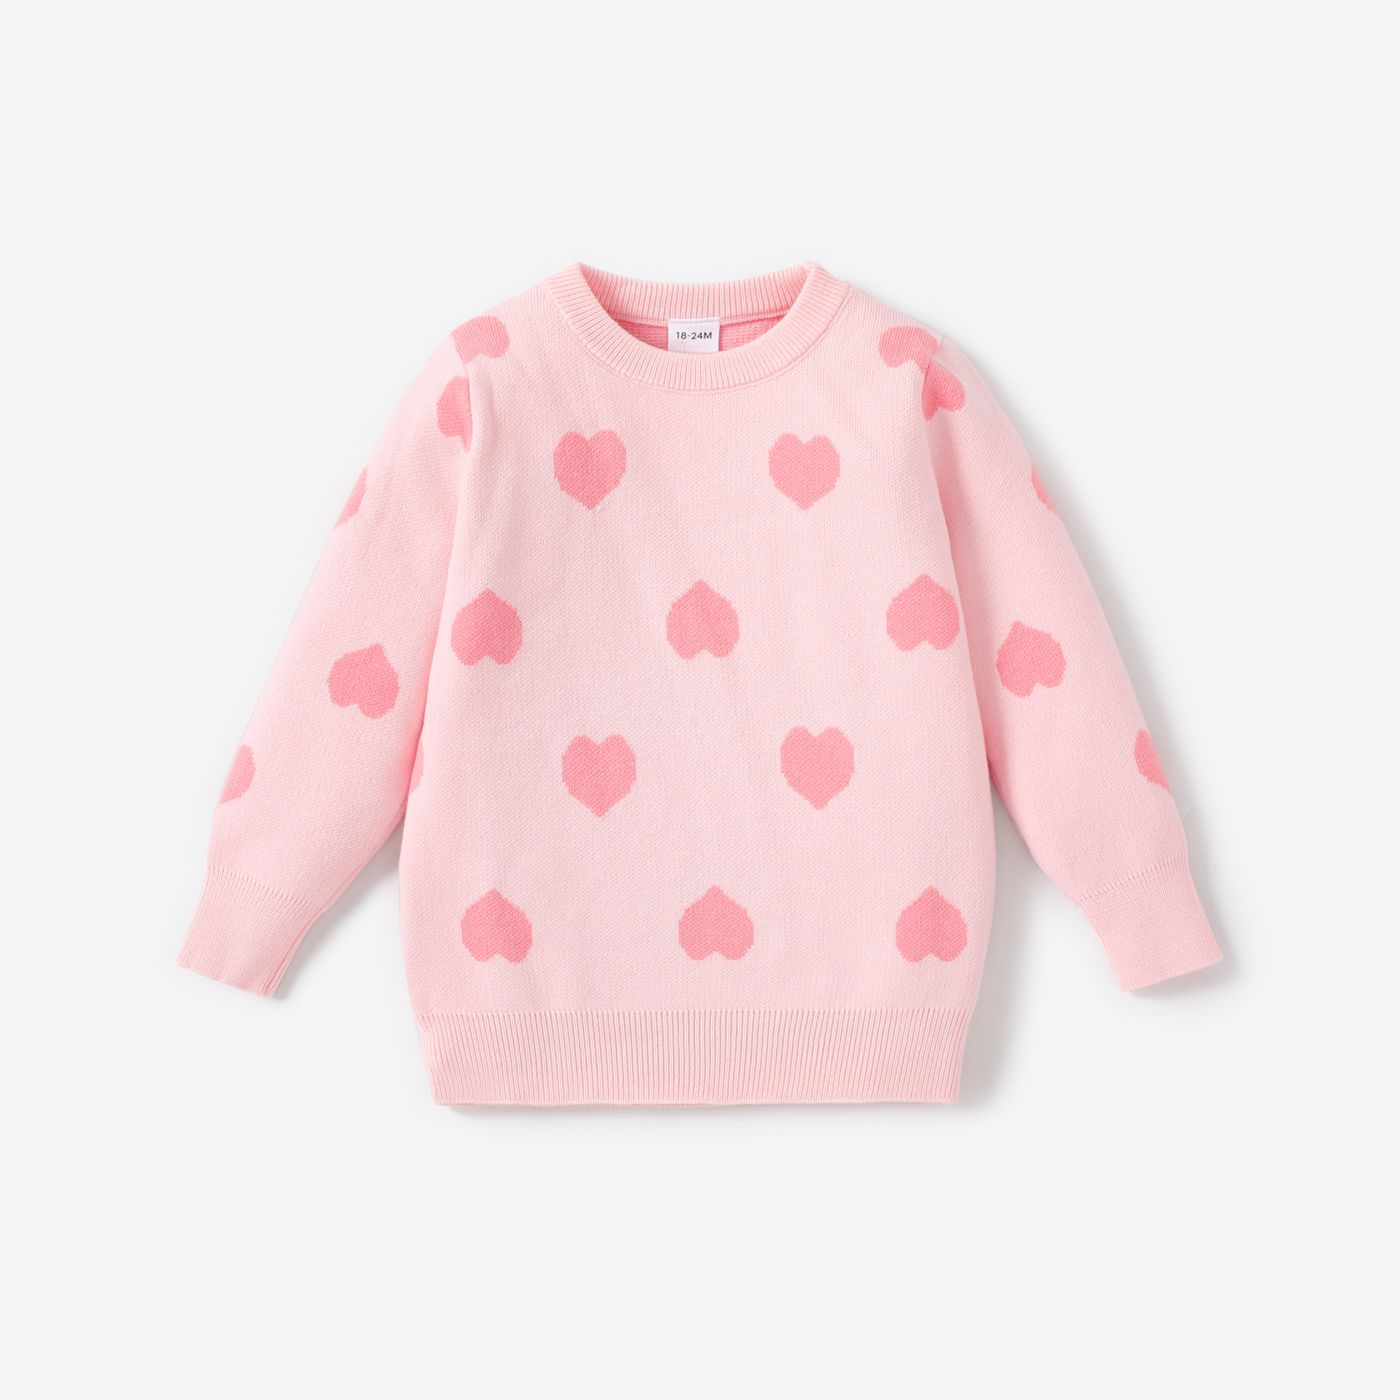 Toddler Girl Sweet Heart Pattern Pink Knit Sweater